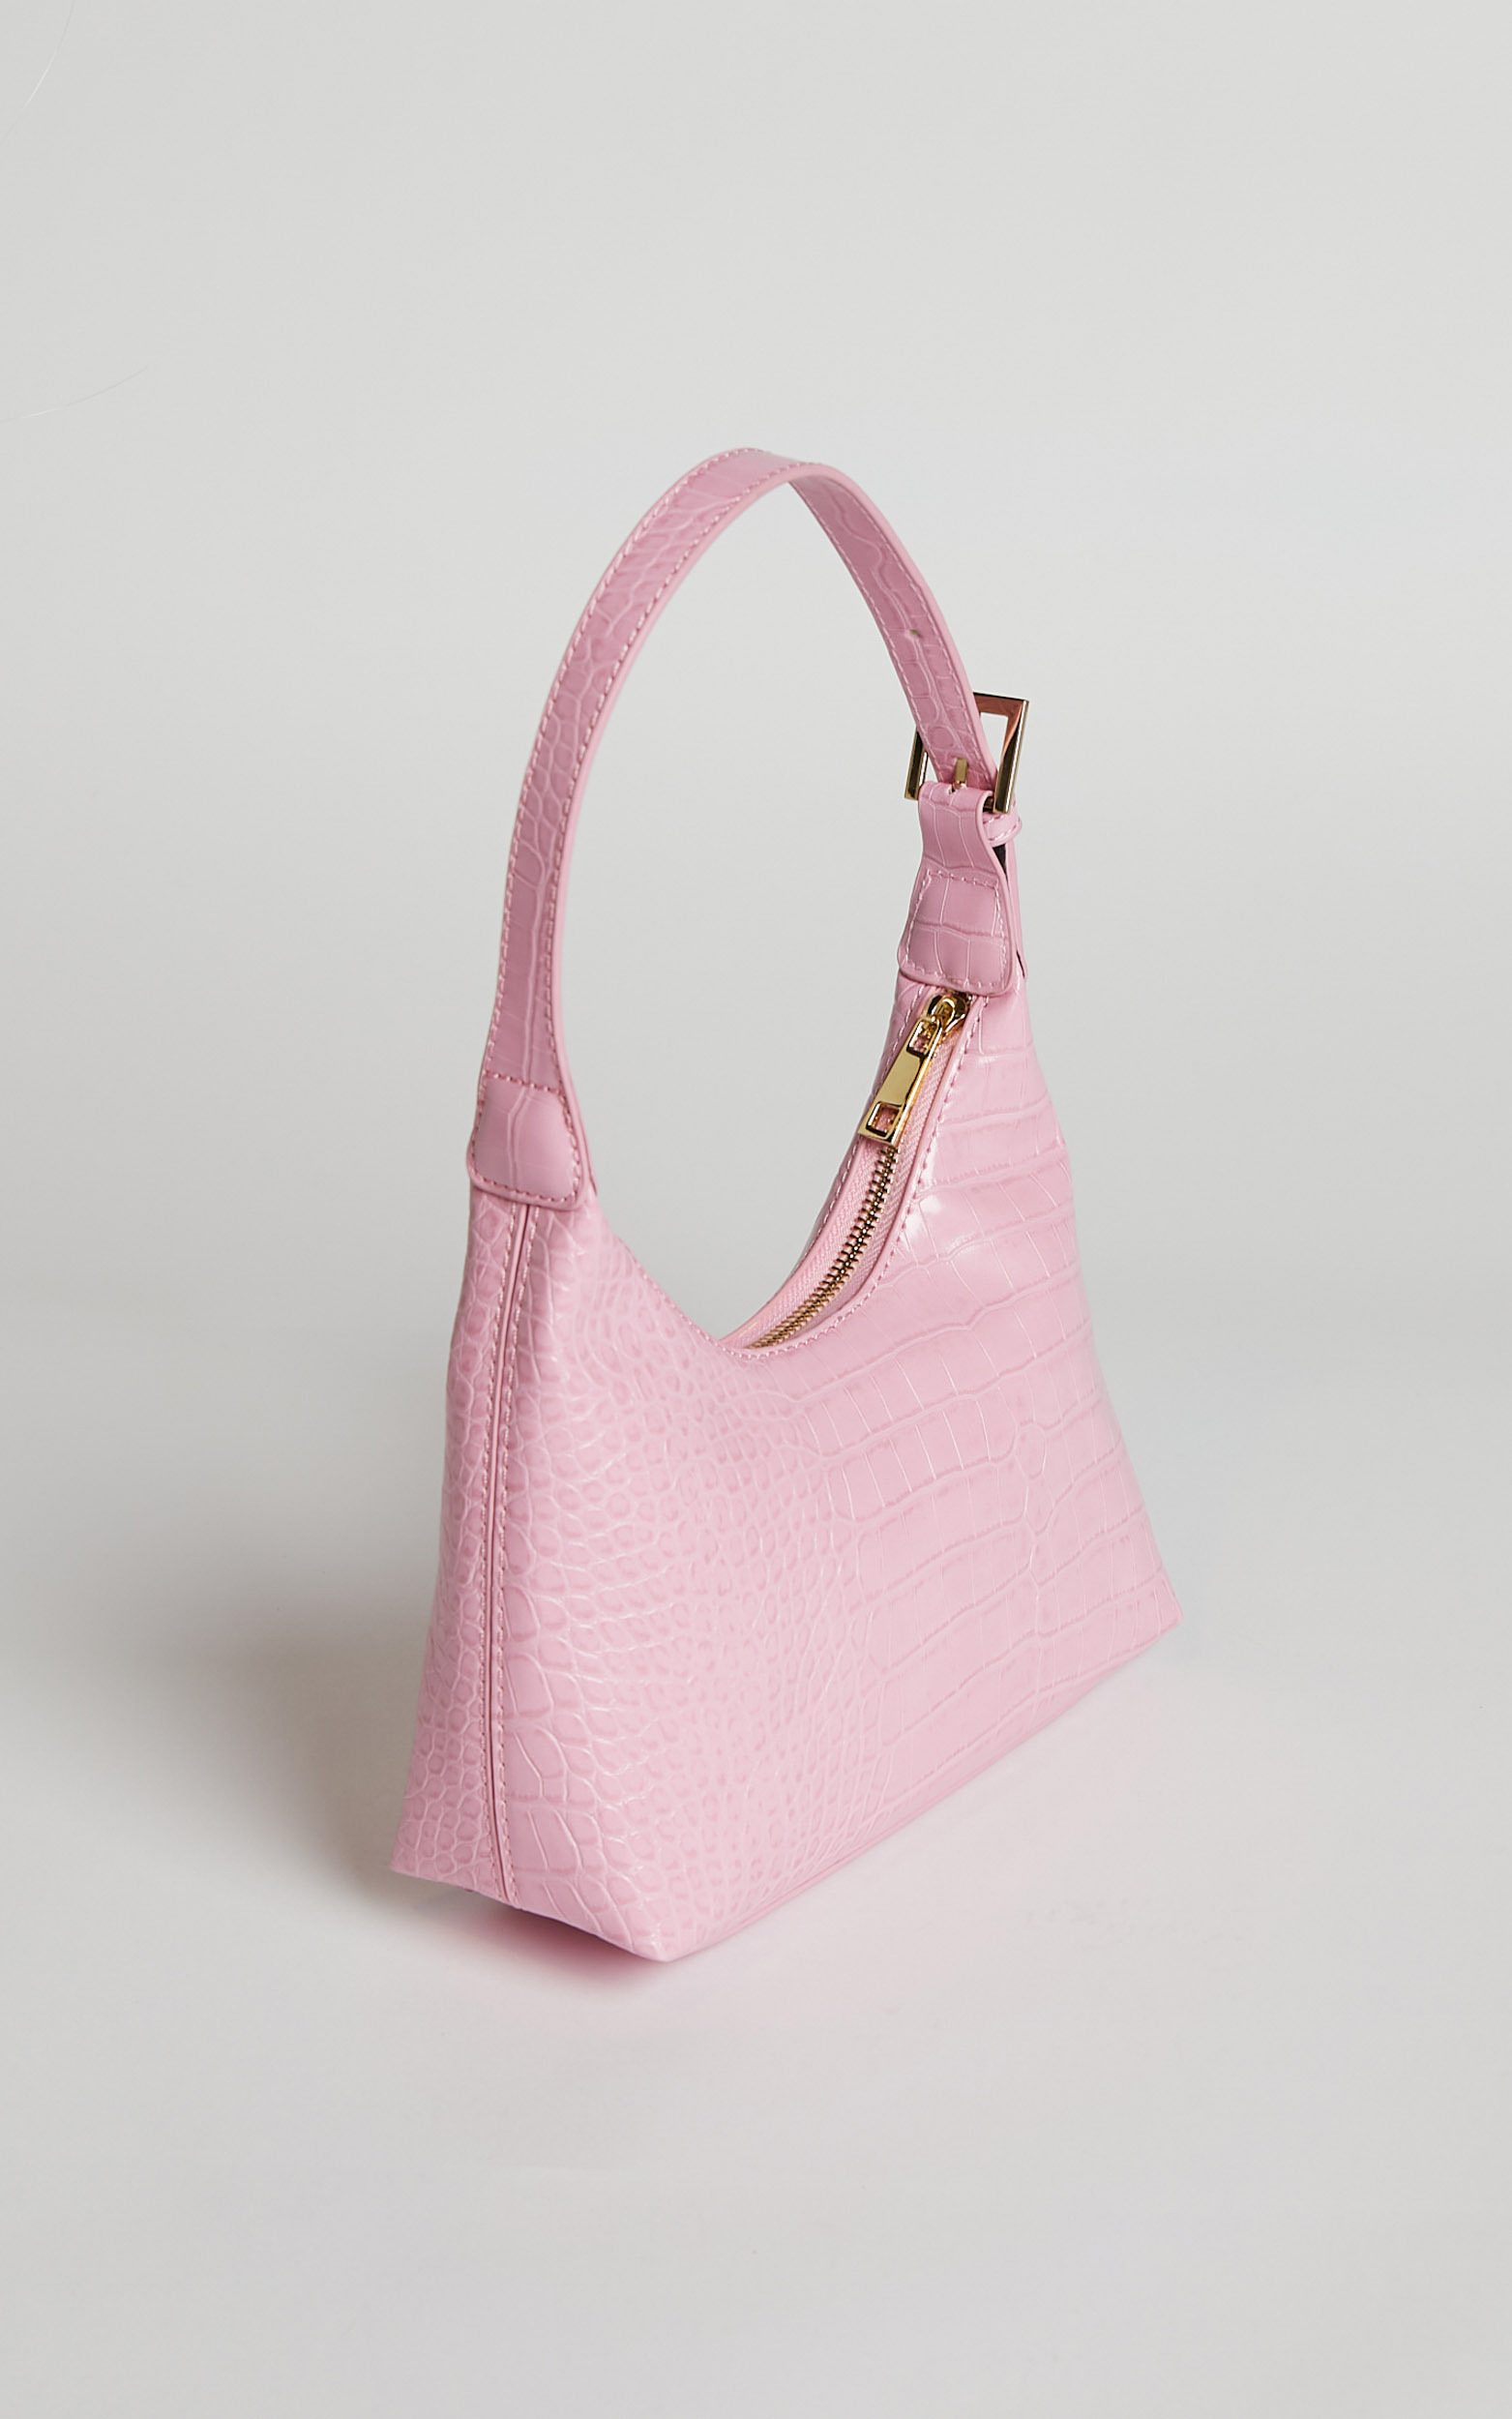 Peta and Jain - Cambridge Bag in Pink Croc / Gold | Showpo